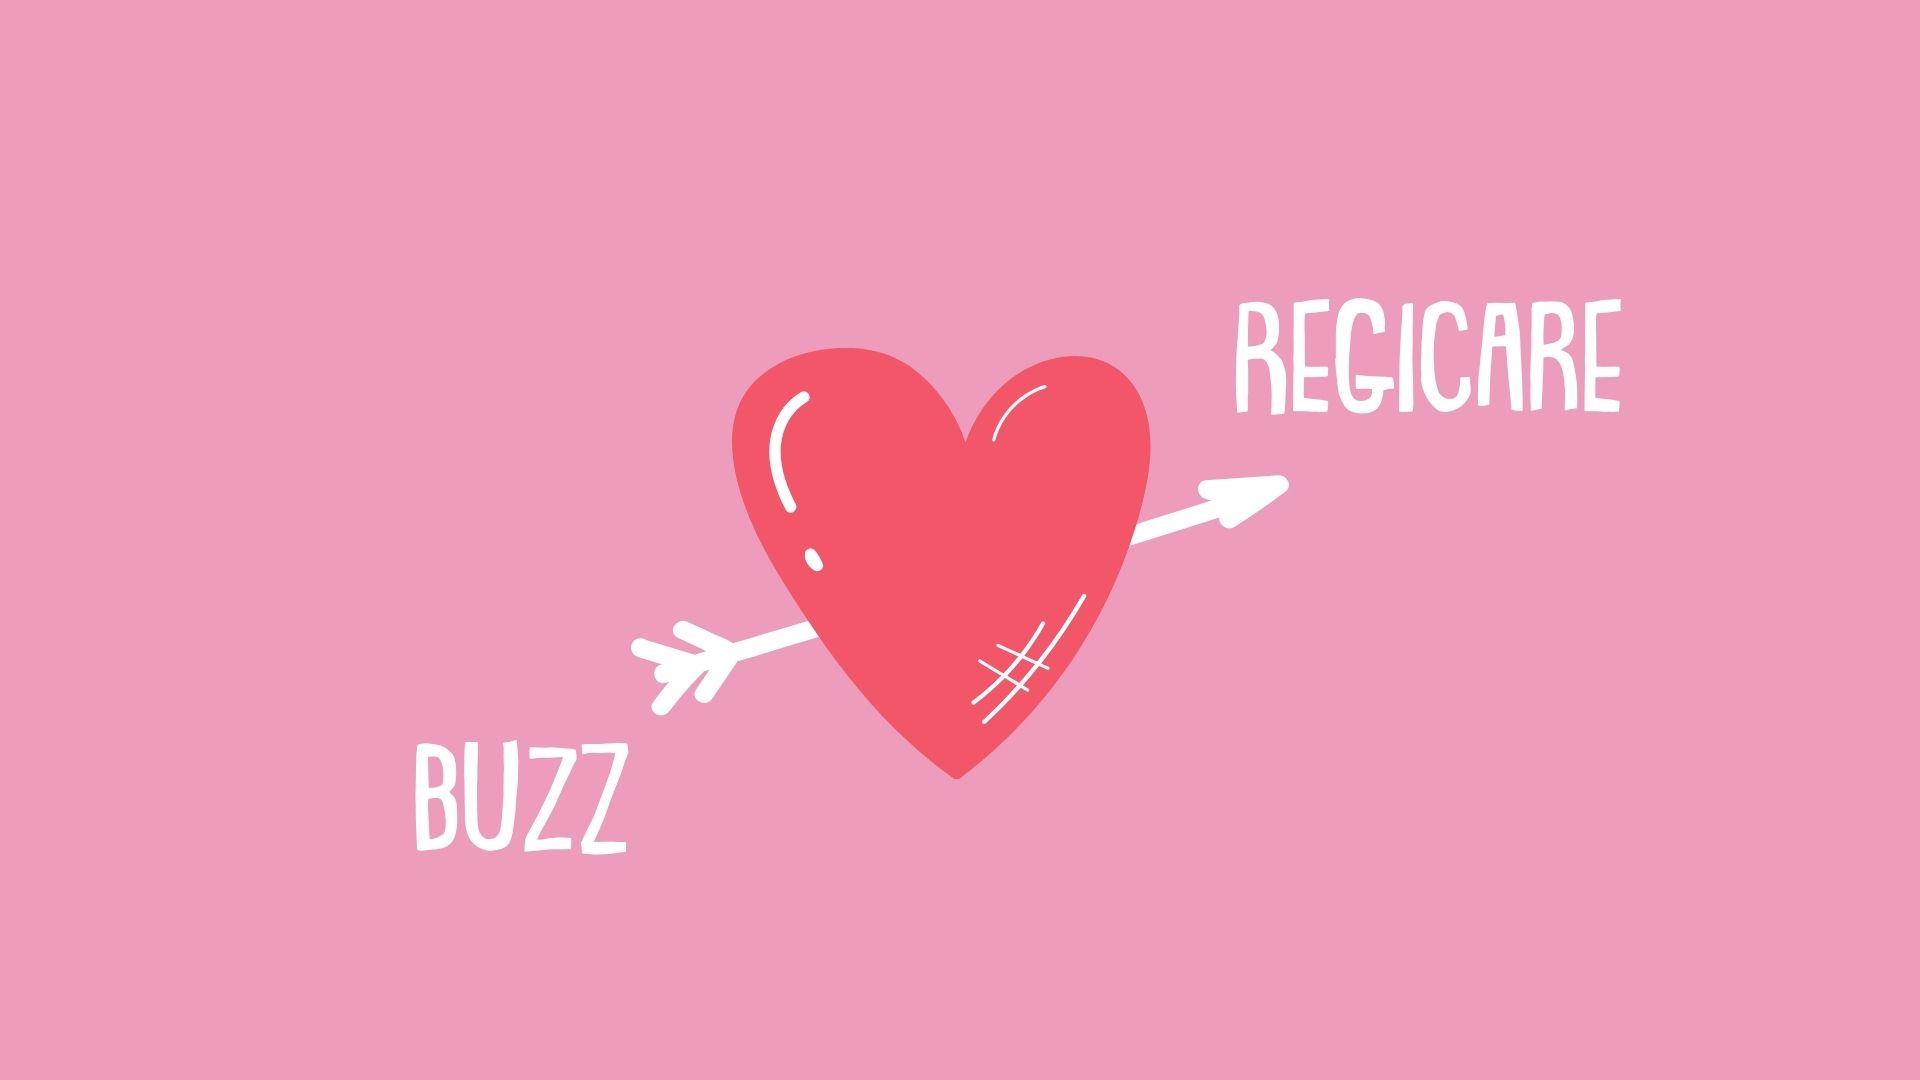 BuZz loves Regicare